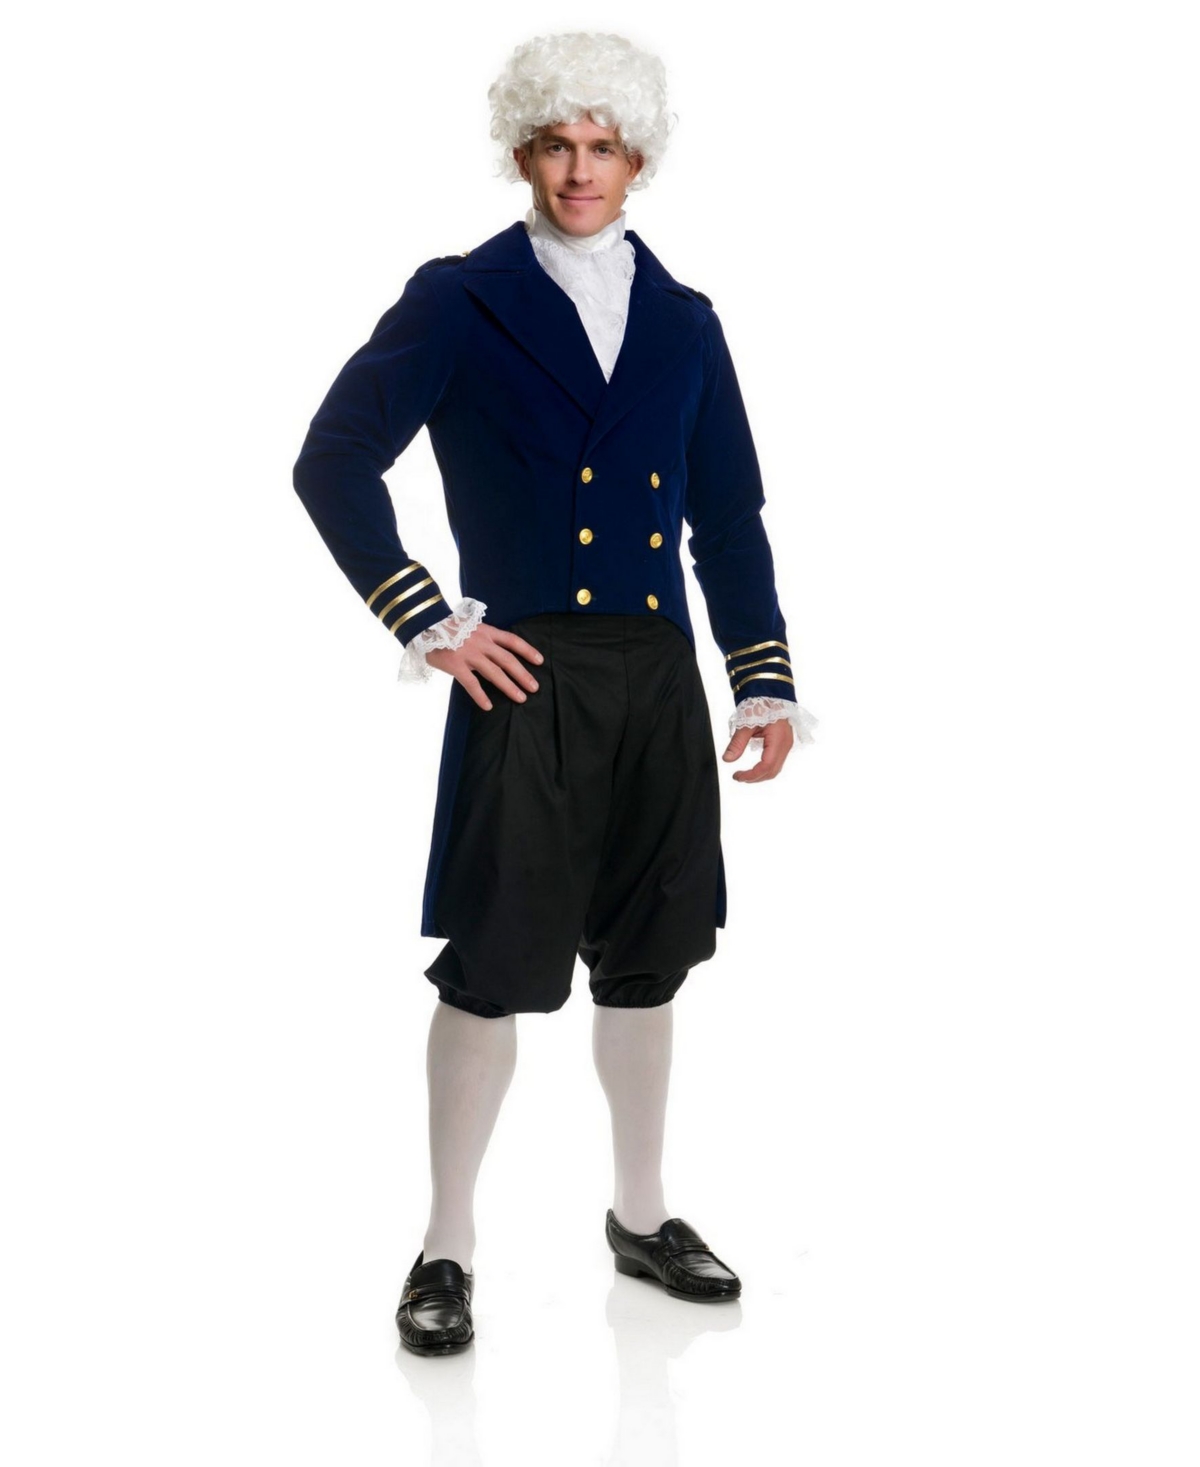 BuySeasons Men's George Washington Adult Costume